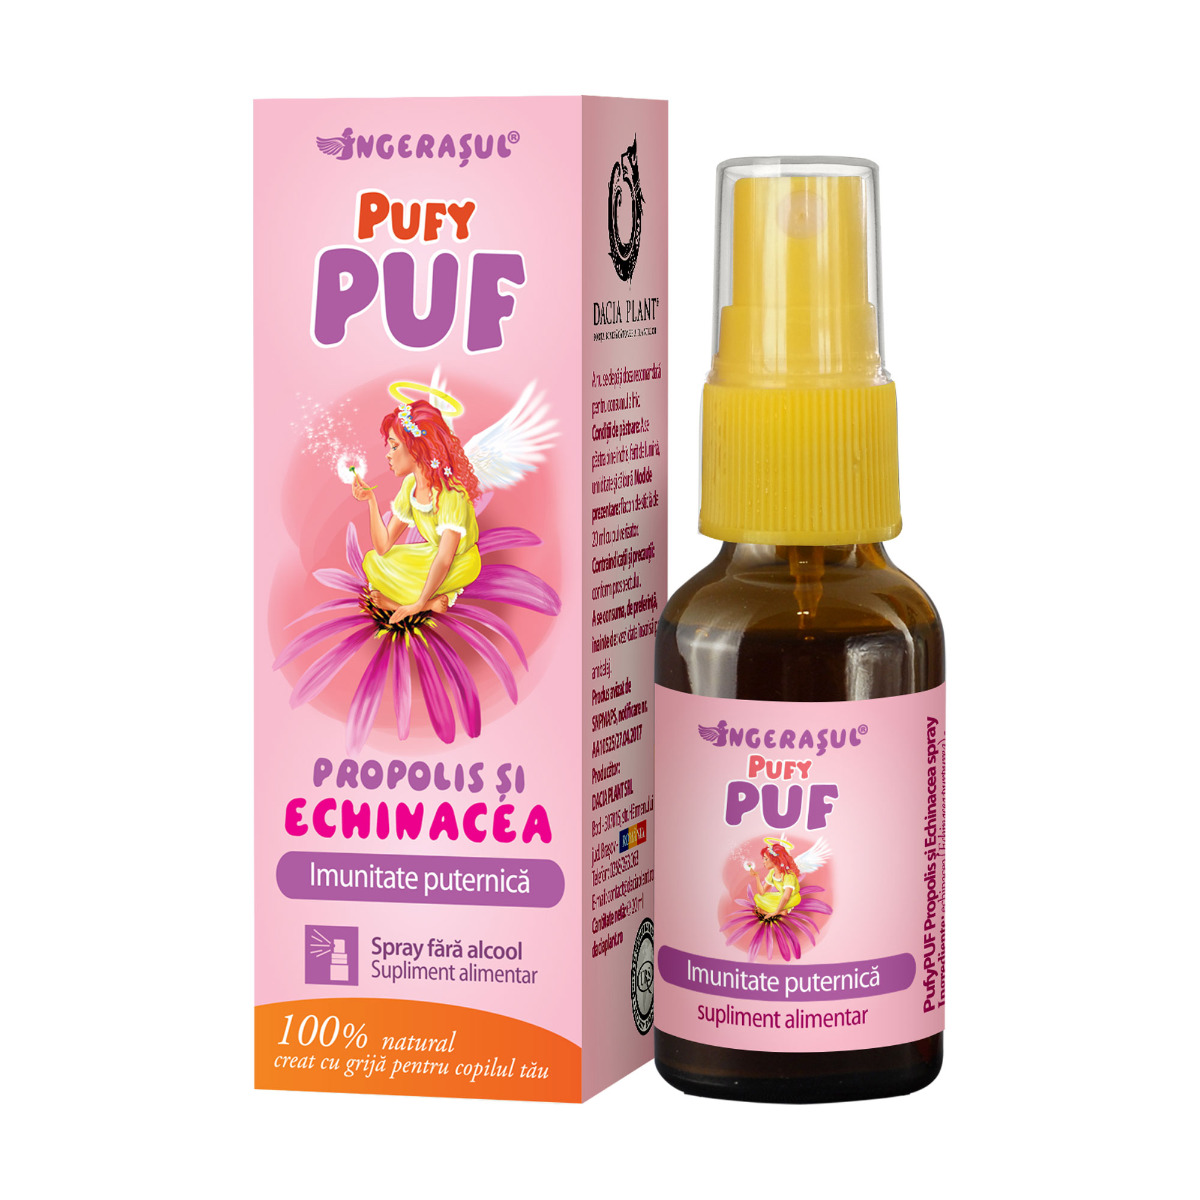 PufyPUF Propolis si Echinacea spray – intareste imunitatea daciaplant.ro